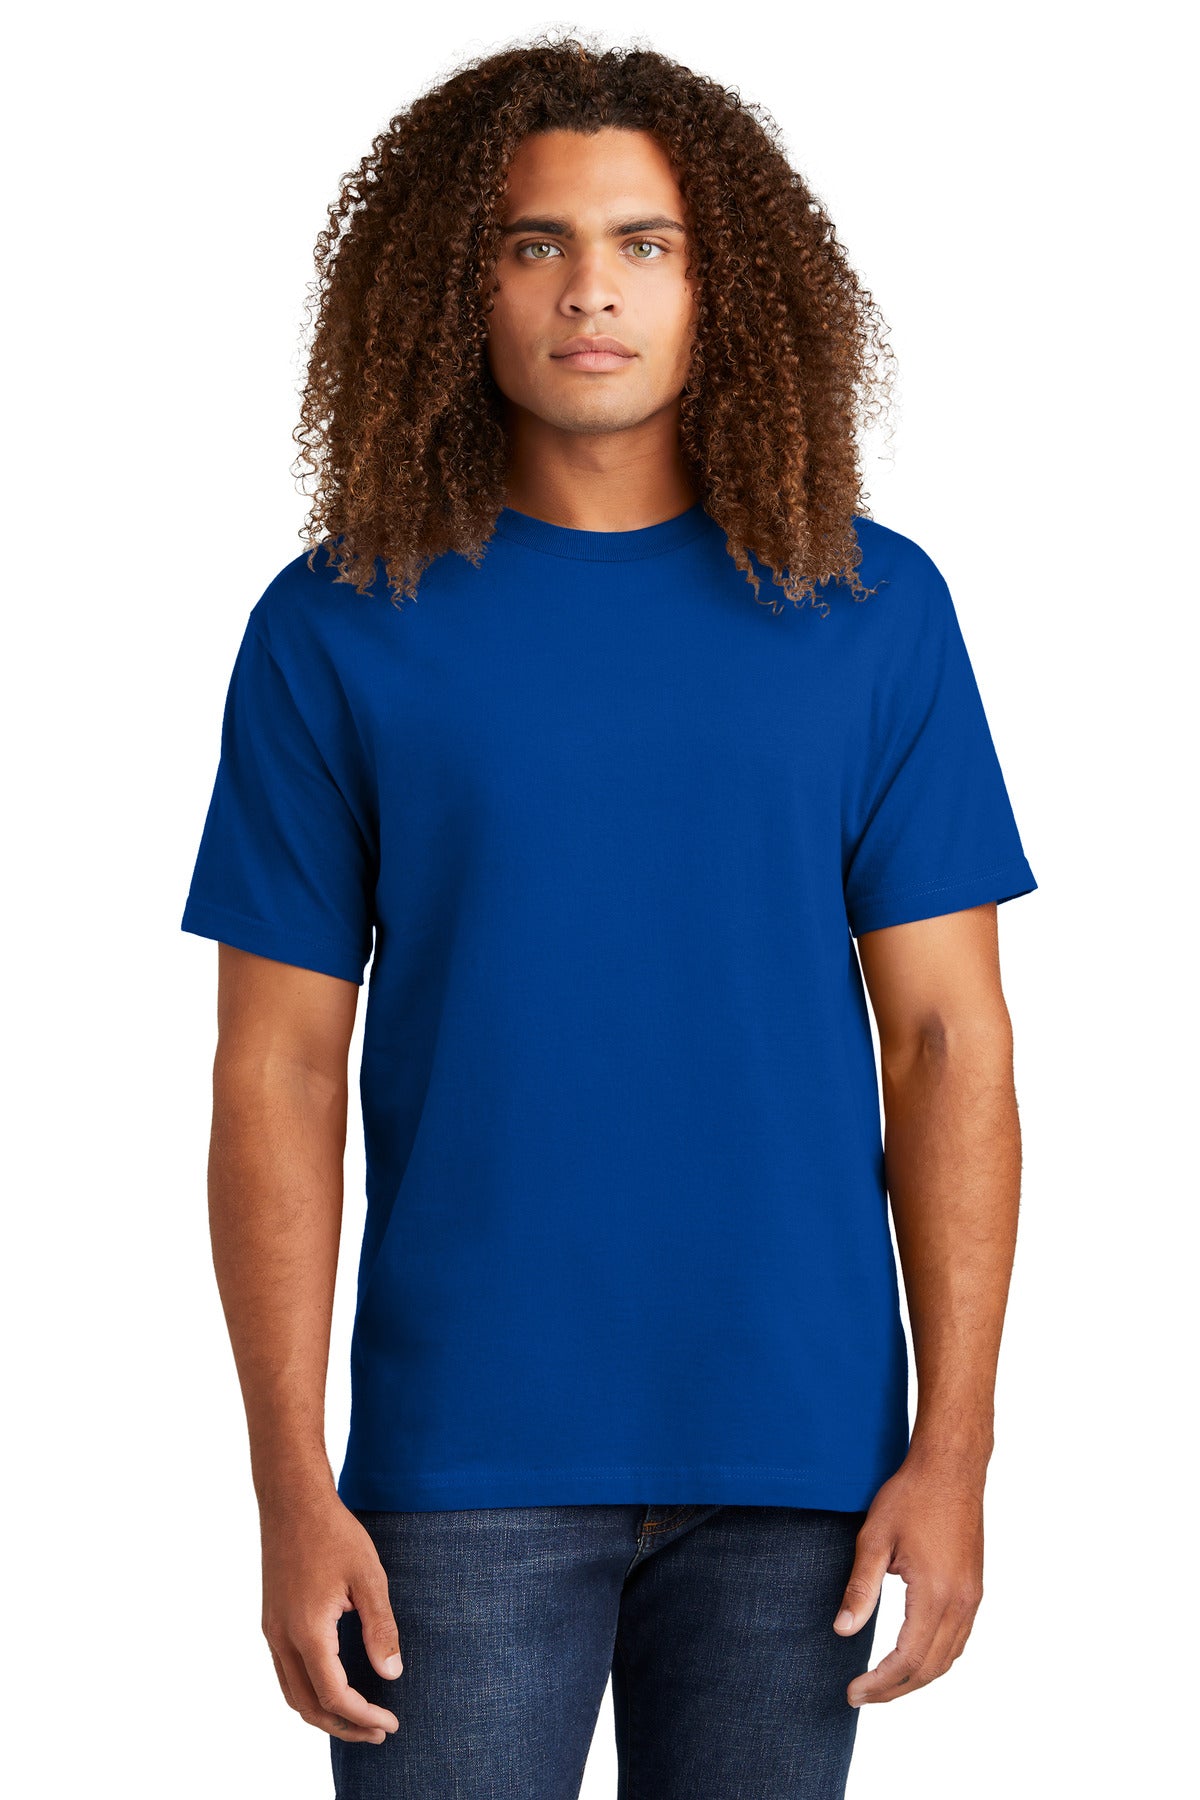 American Apparel® Unisex Heavyweight T-Shirt 1301